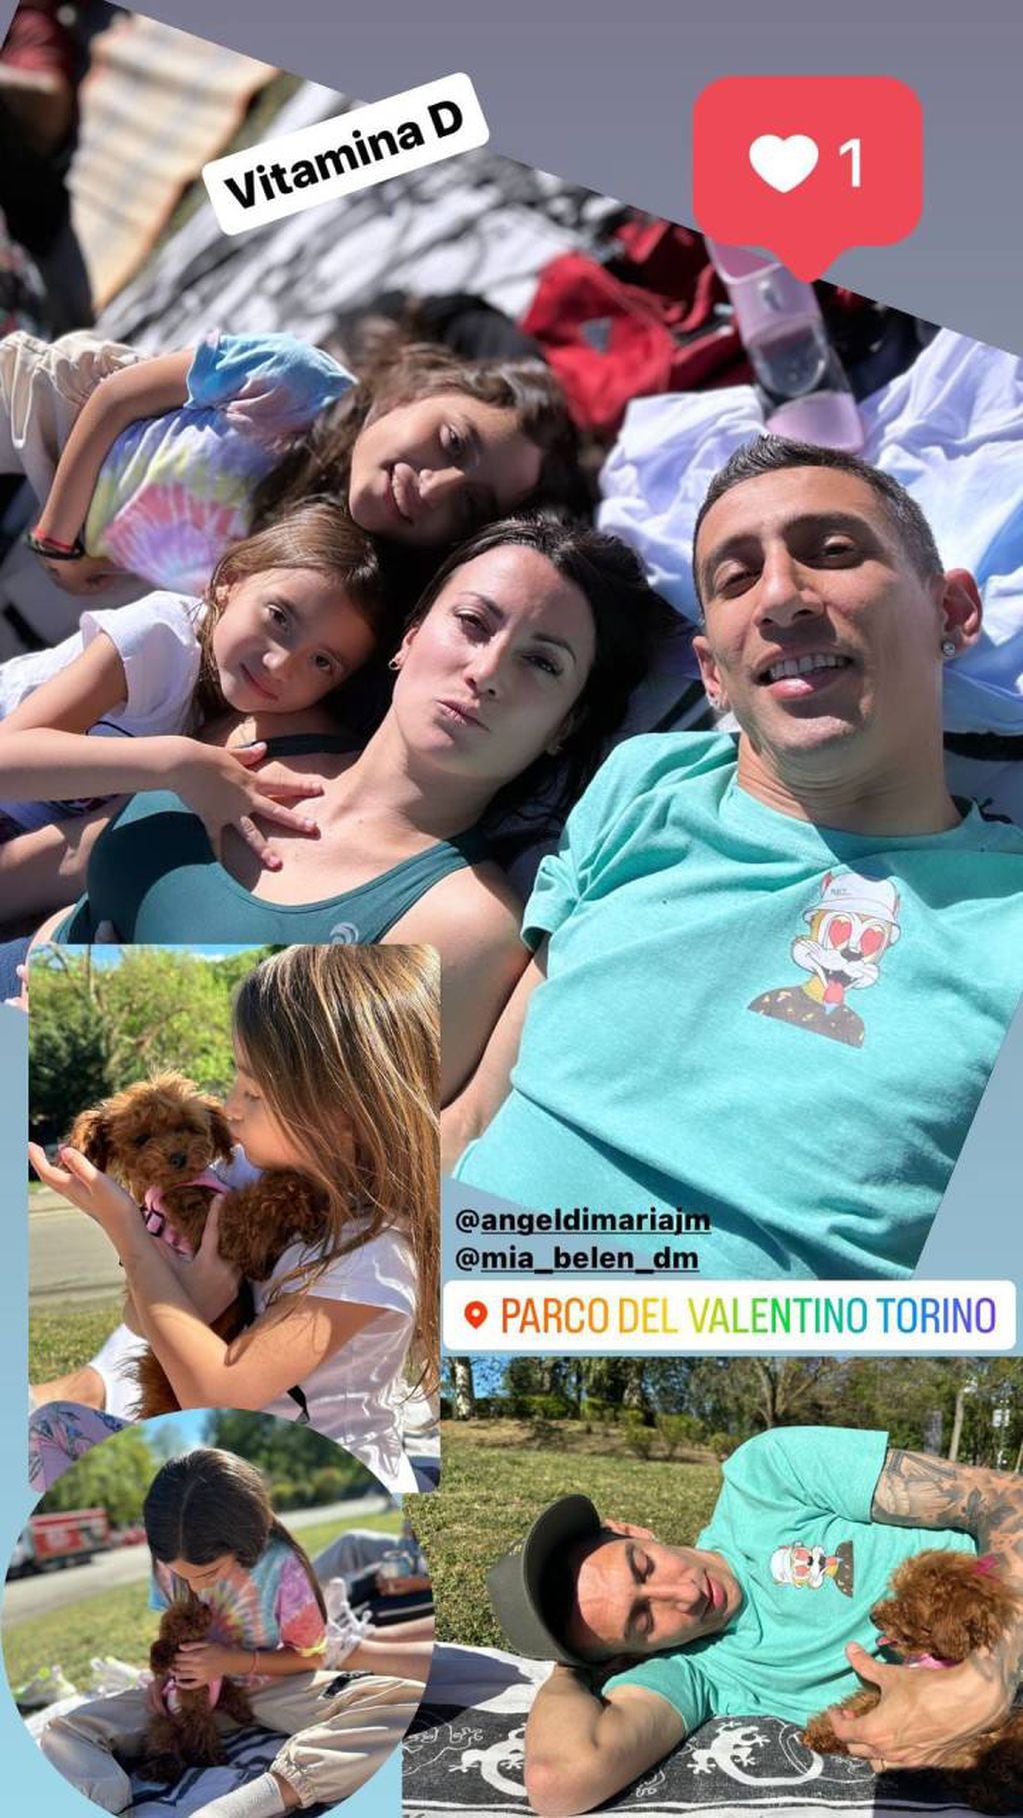 El matrimonio rosarino armó un picnic en Turín.